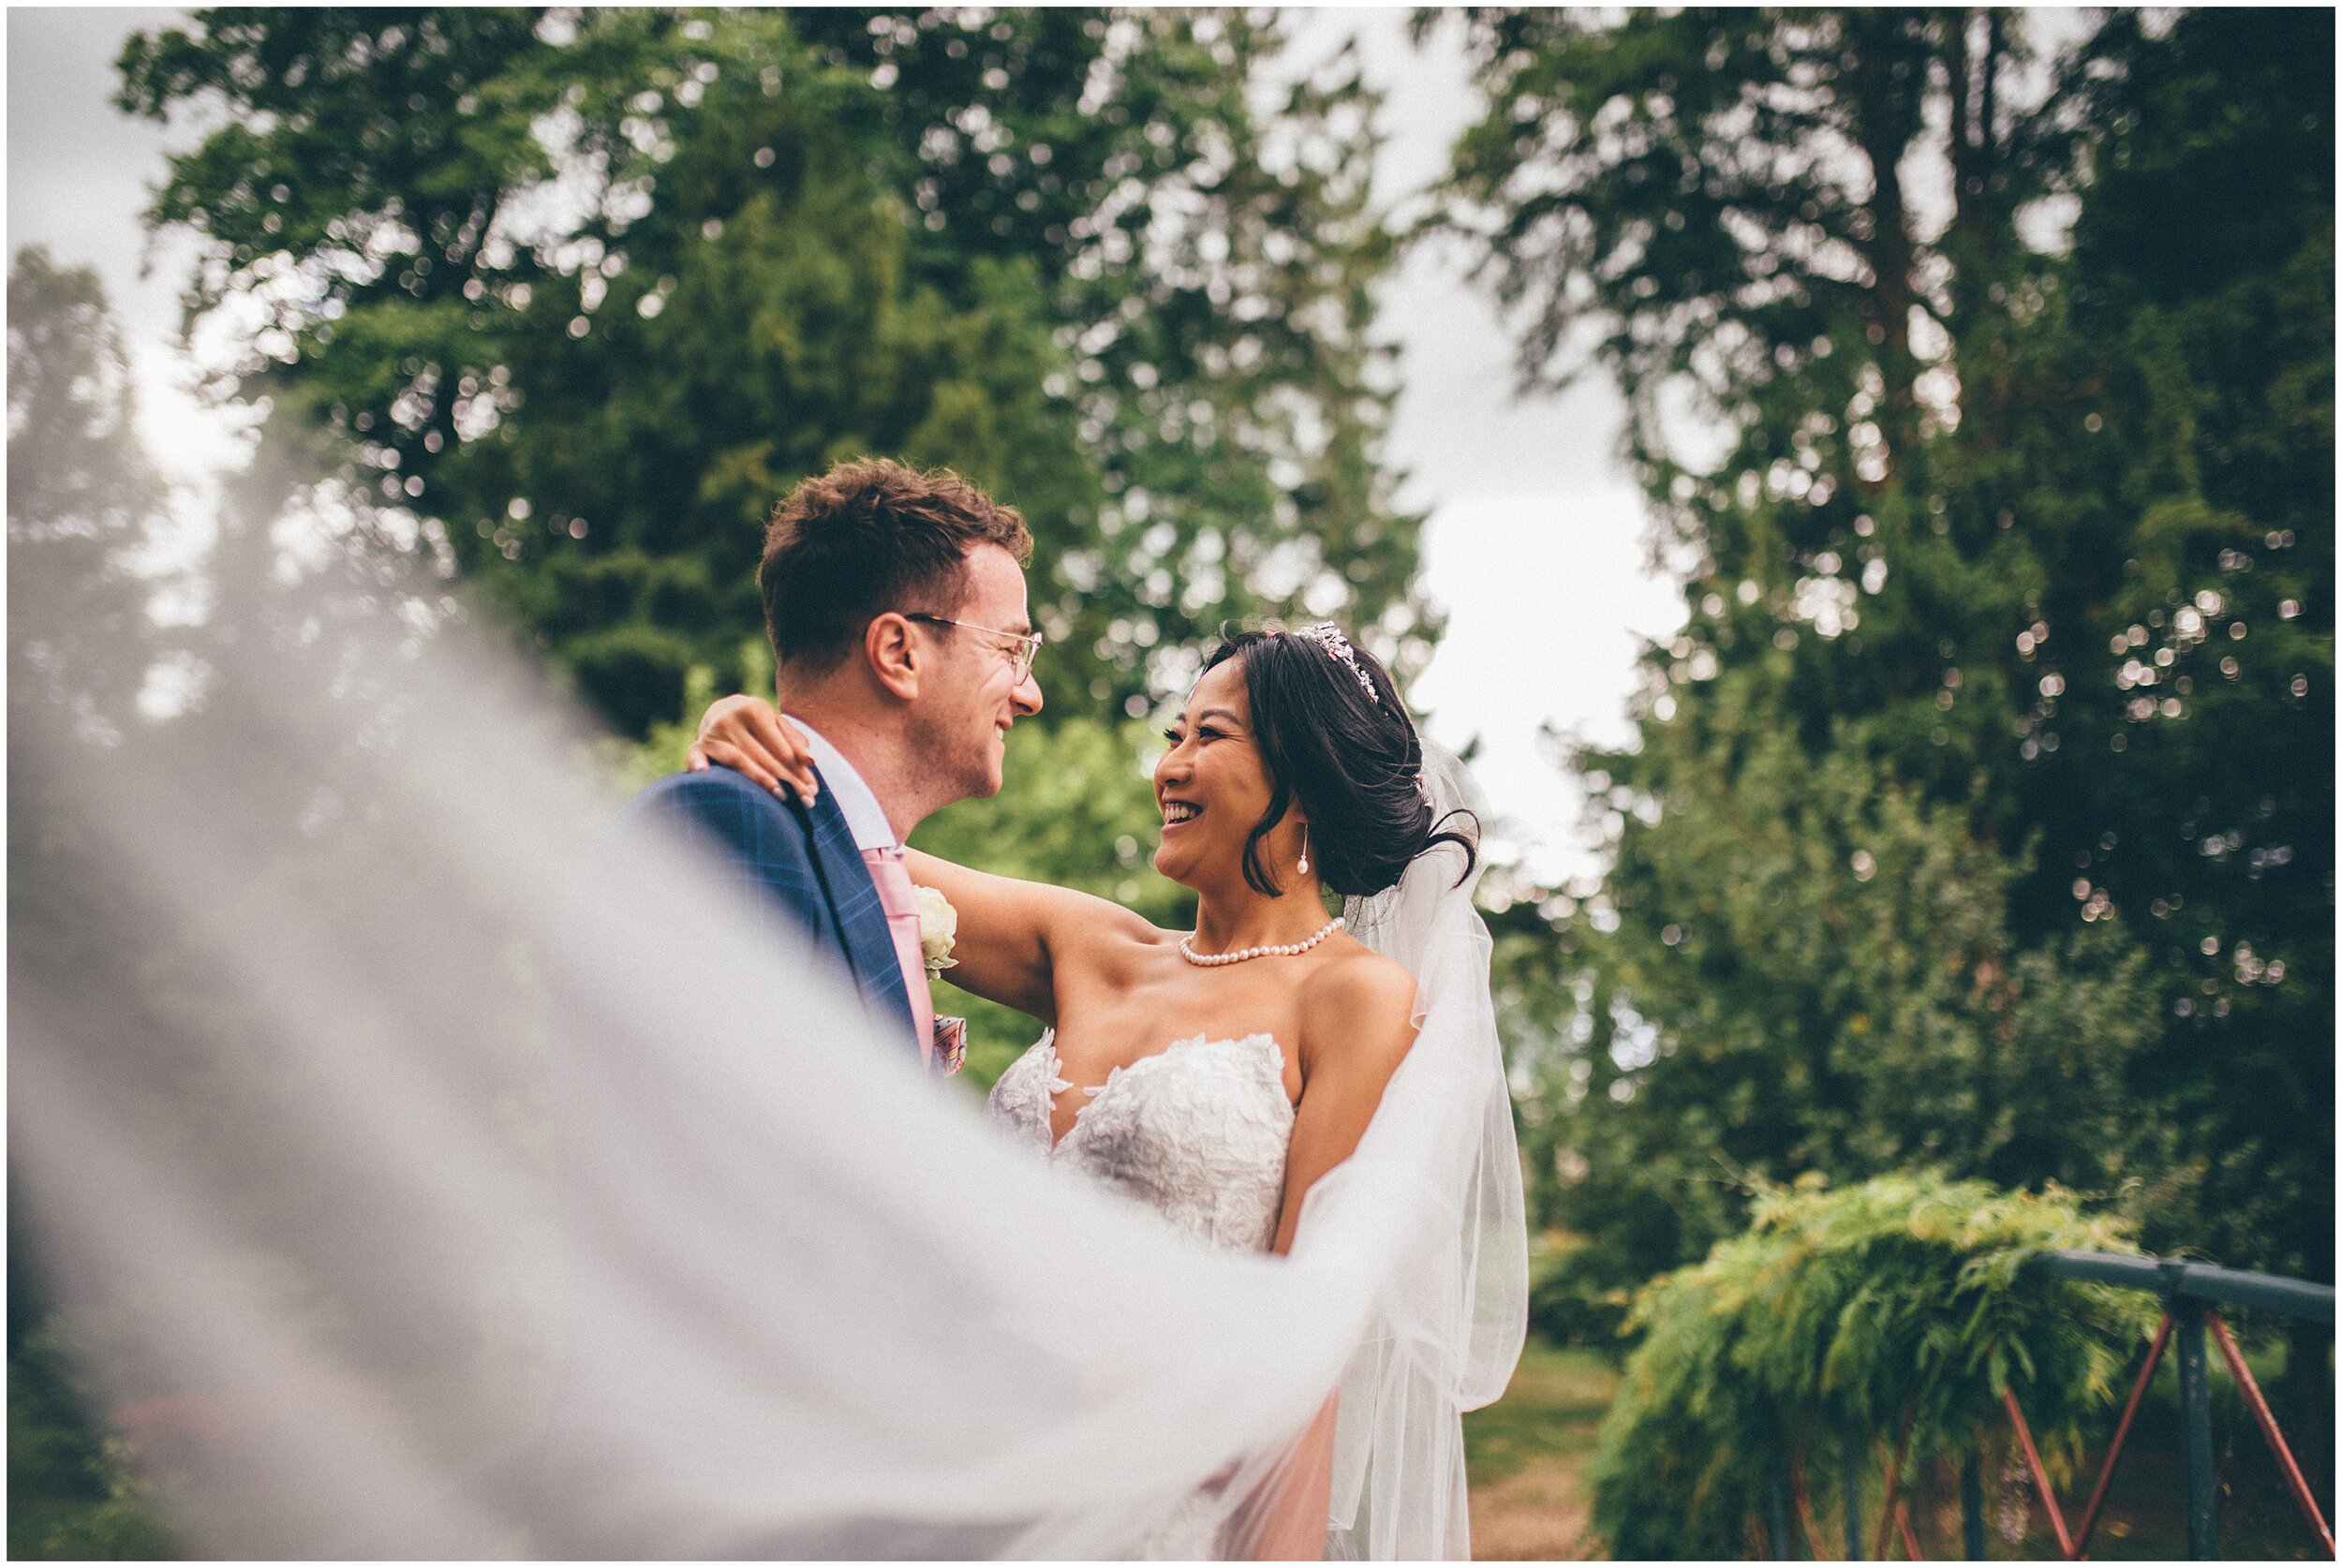 Super smiley bride with her groom at Chippenham park gardens.